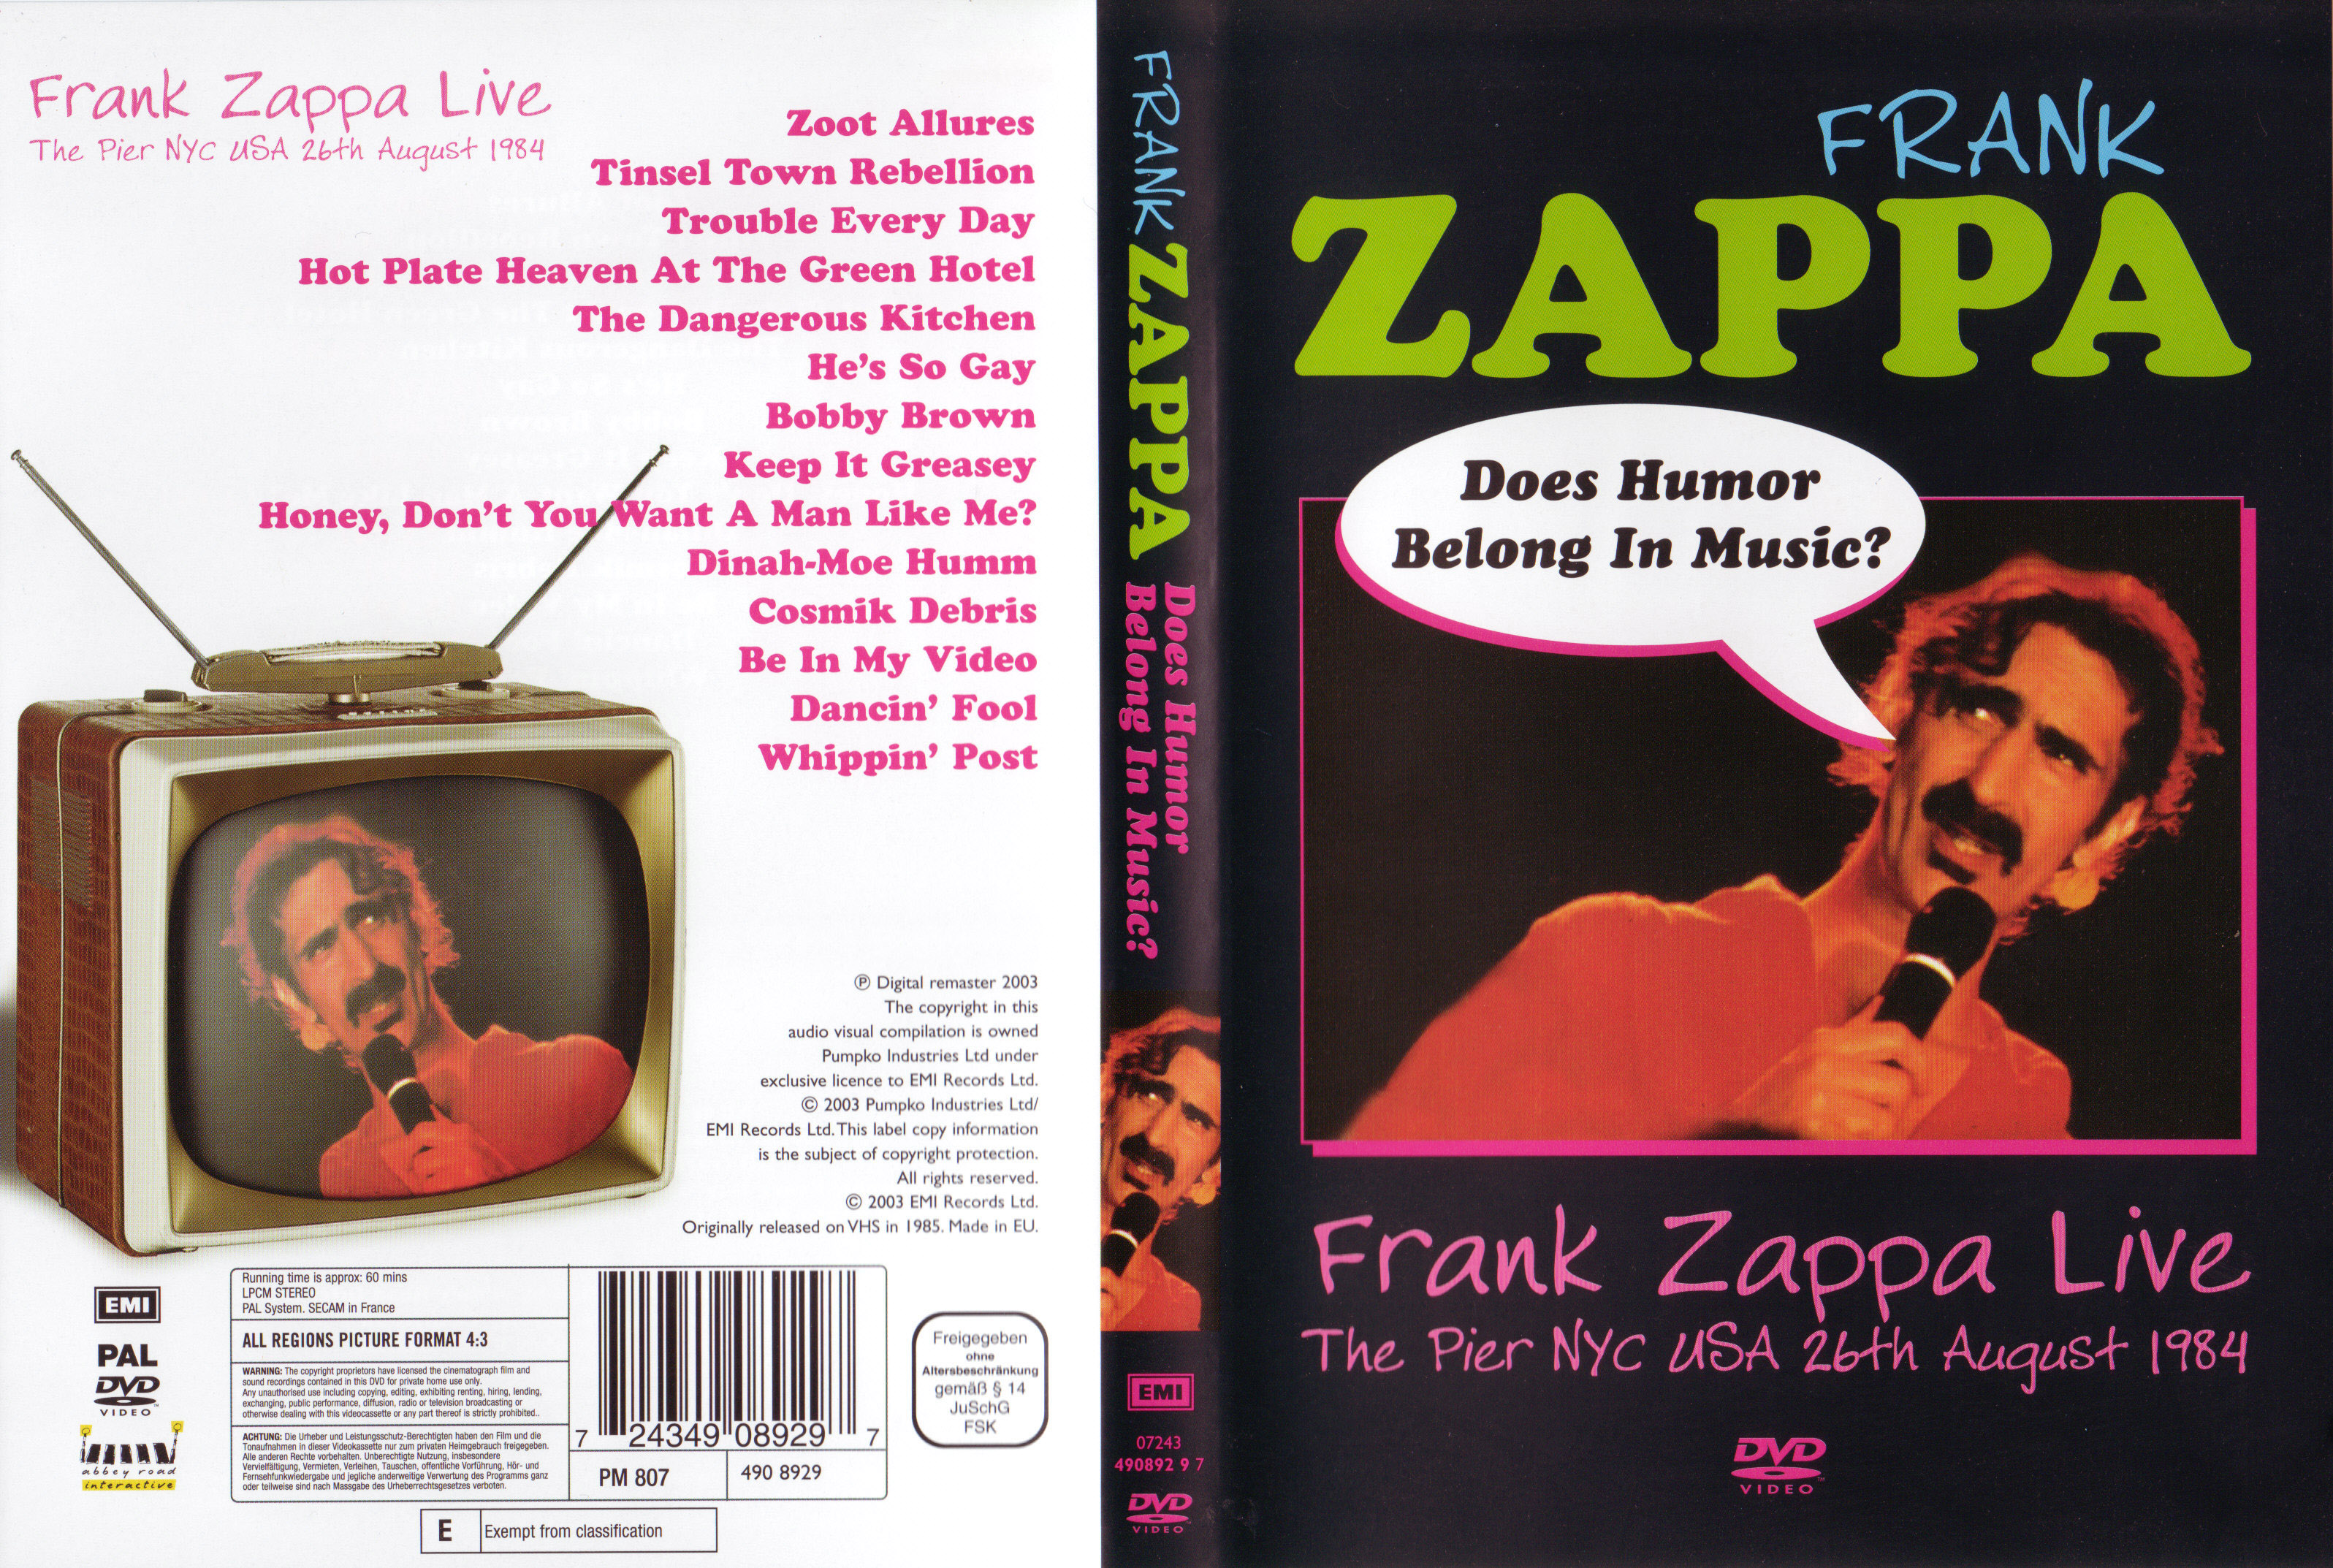 Jaquette DVD Frank Zappa Does Humor Belong In Music